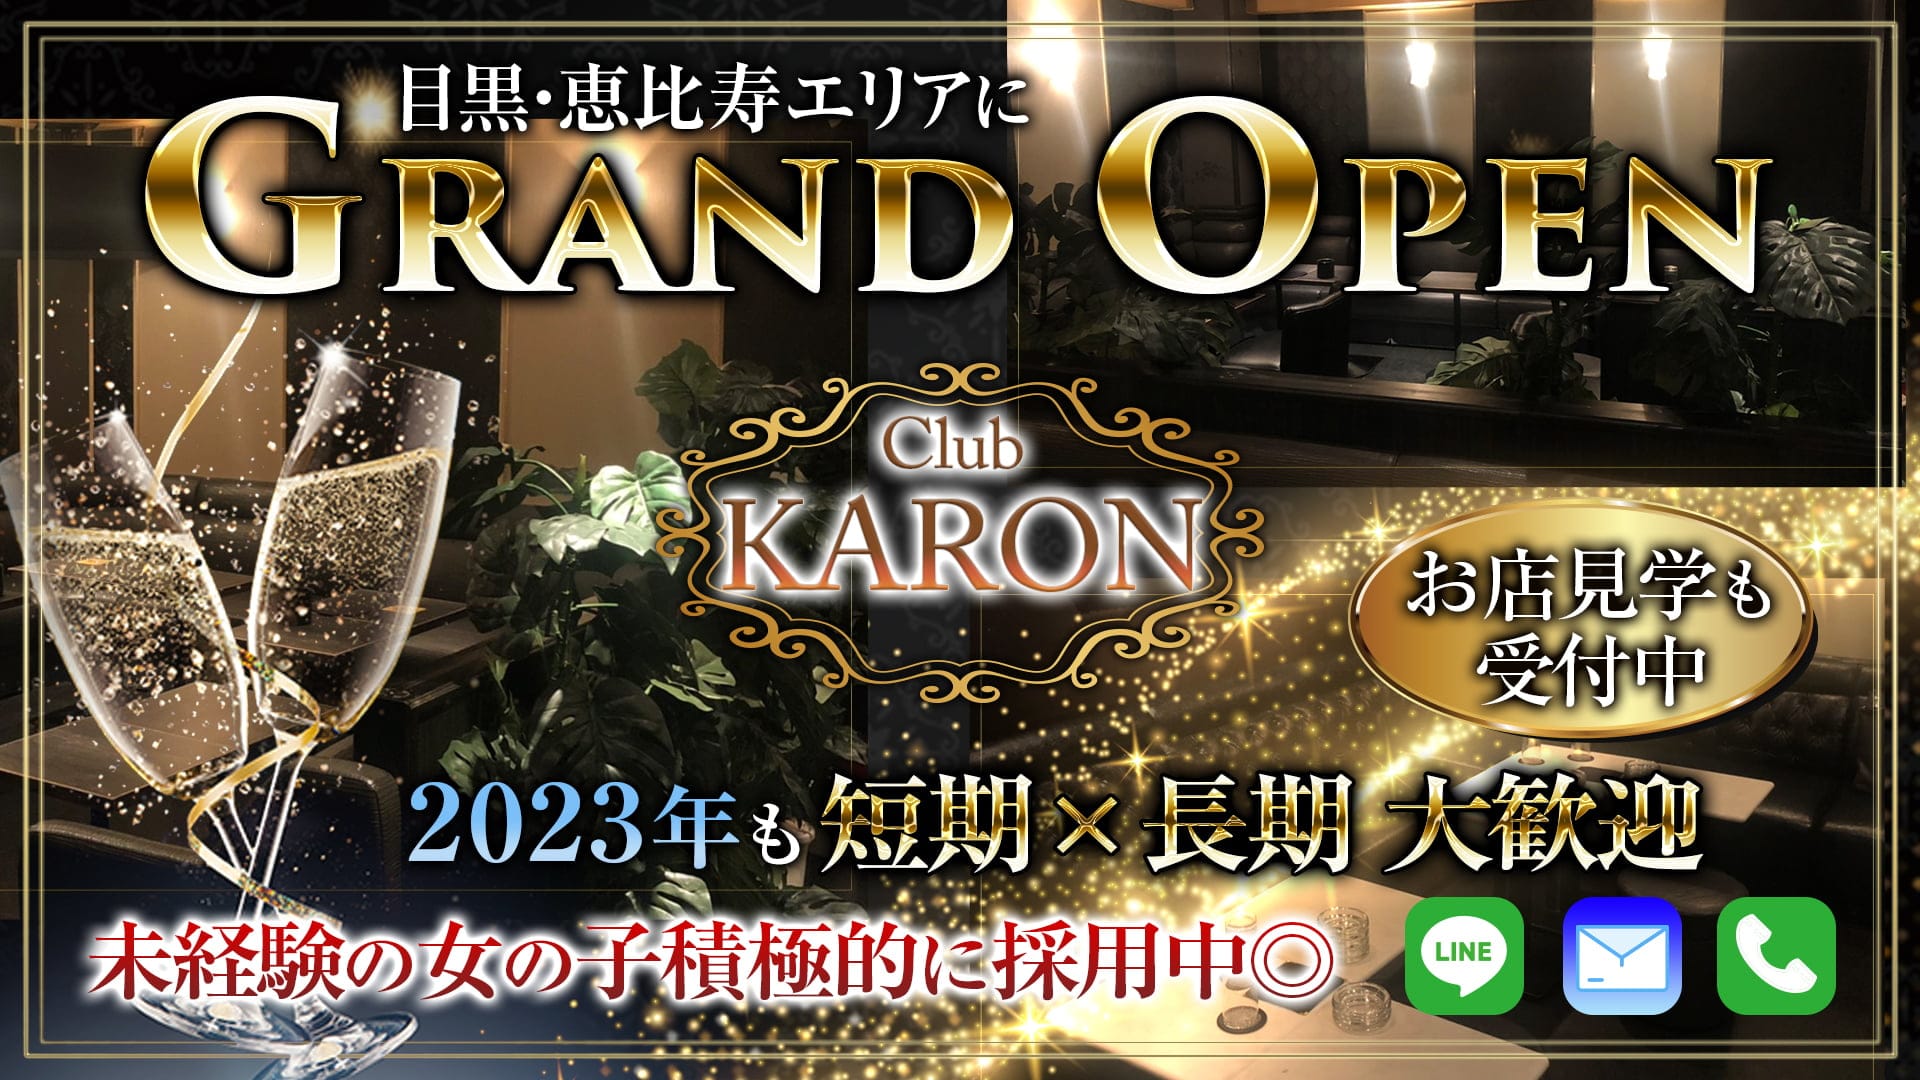 Club KARON(カロン)【公式求人・体入情報】 恵比寿キャバクラ TOP画像